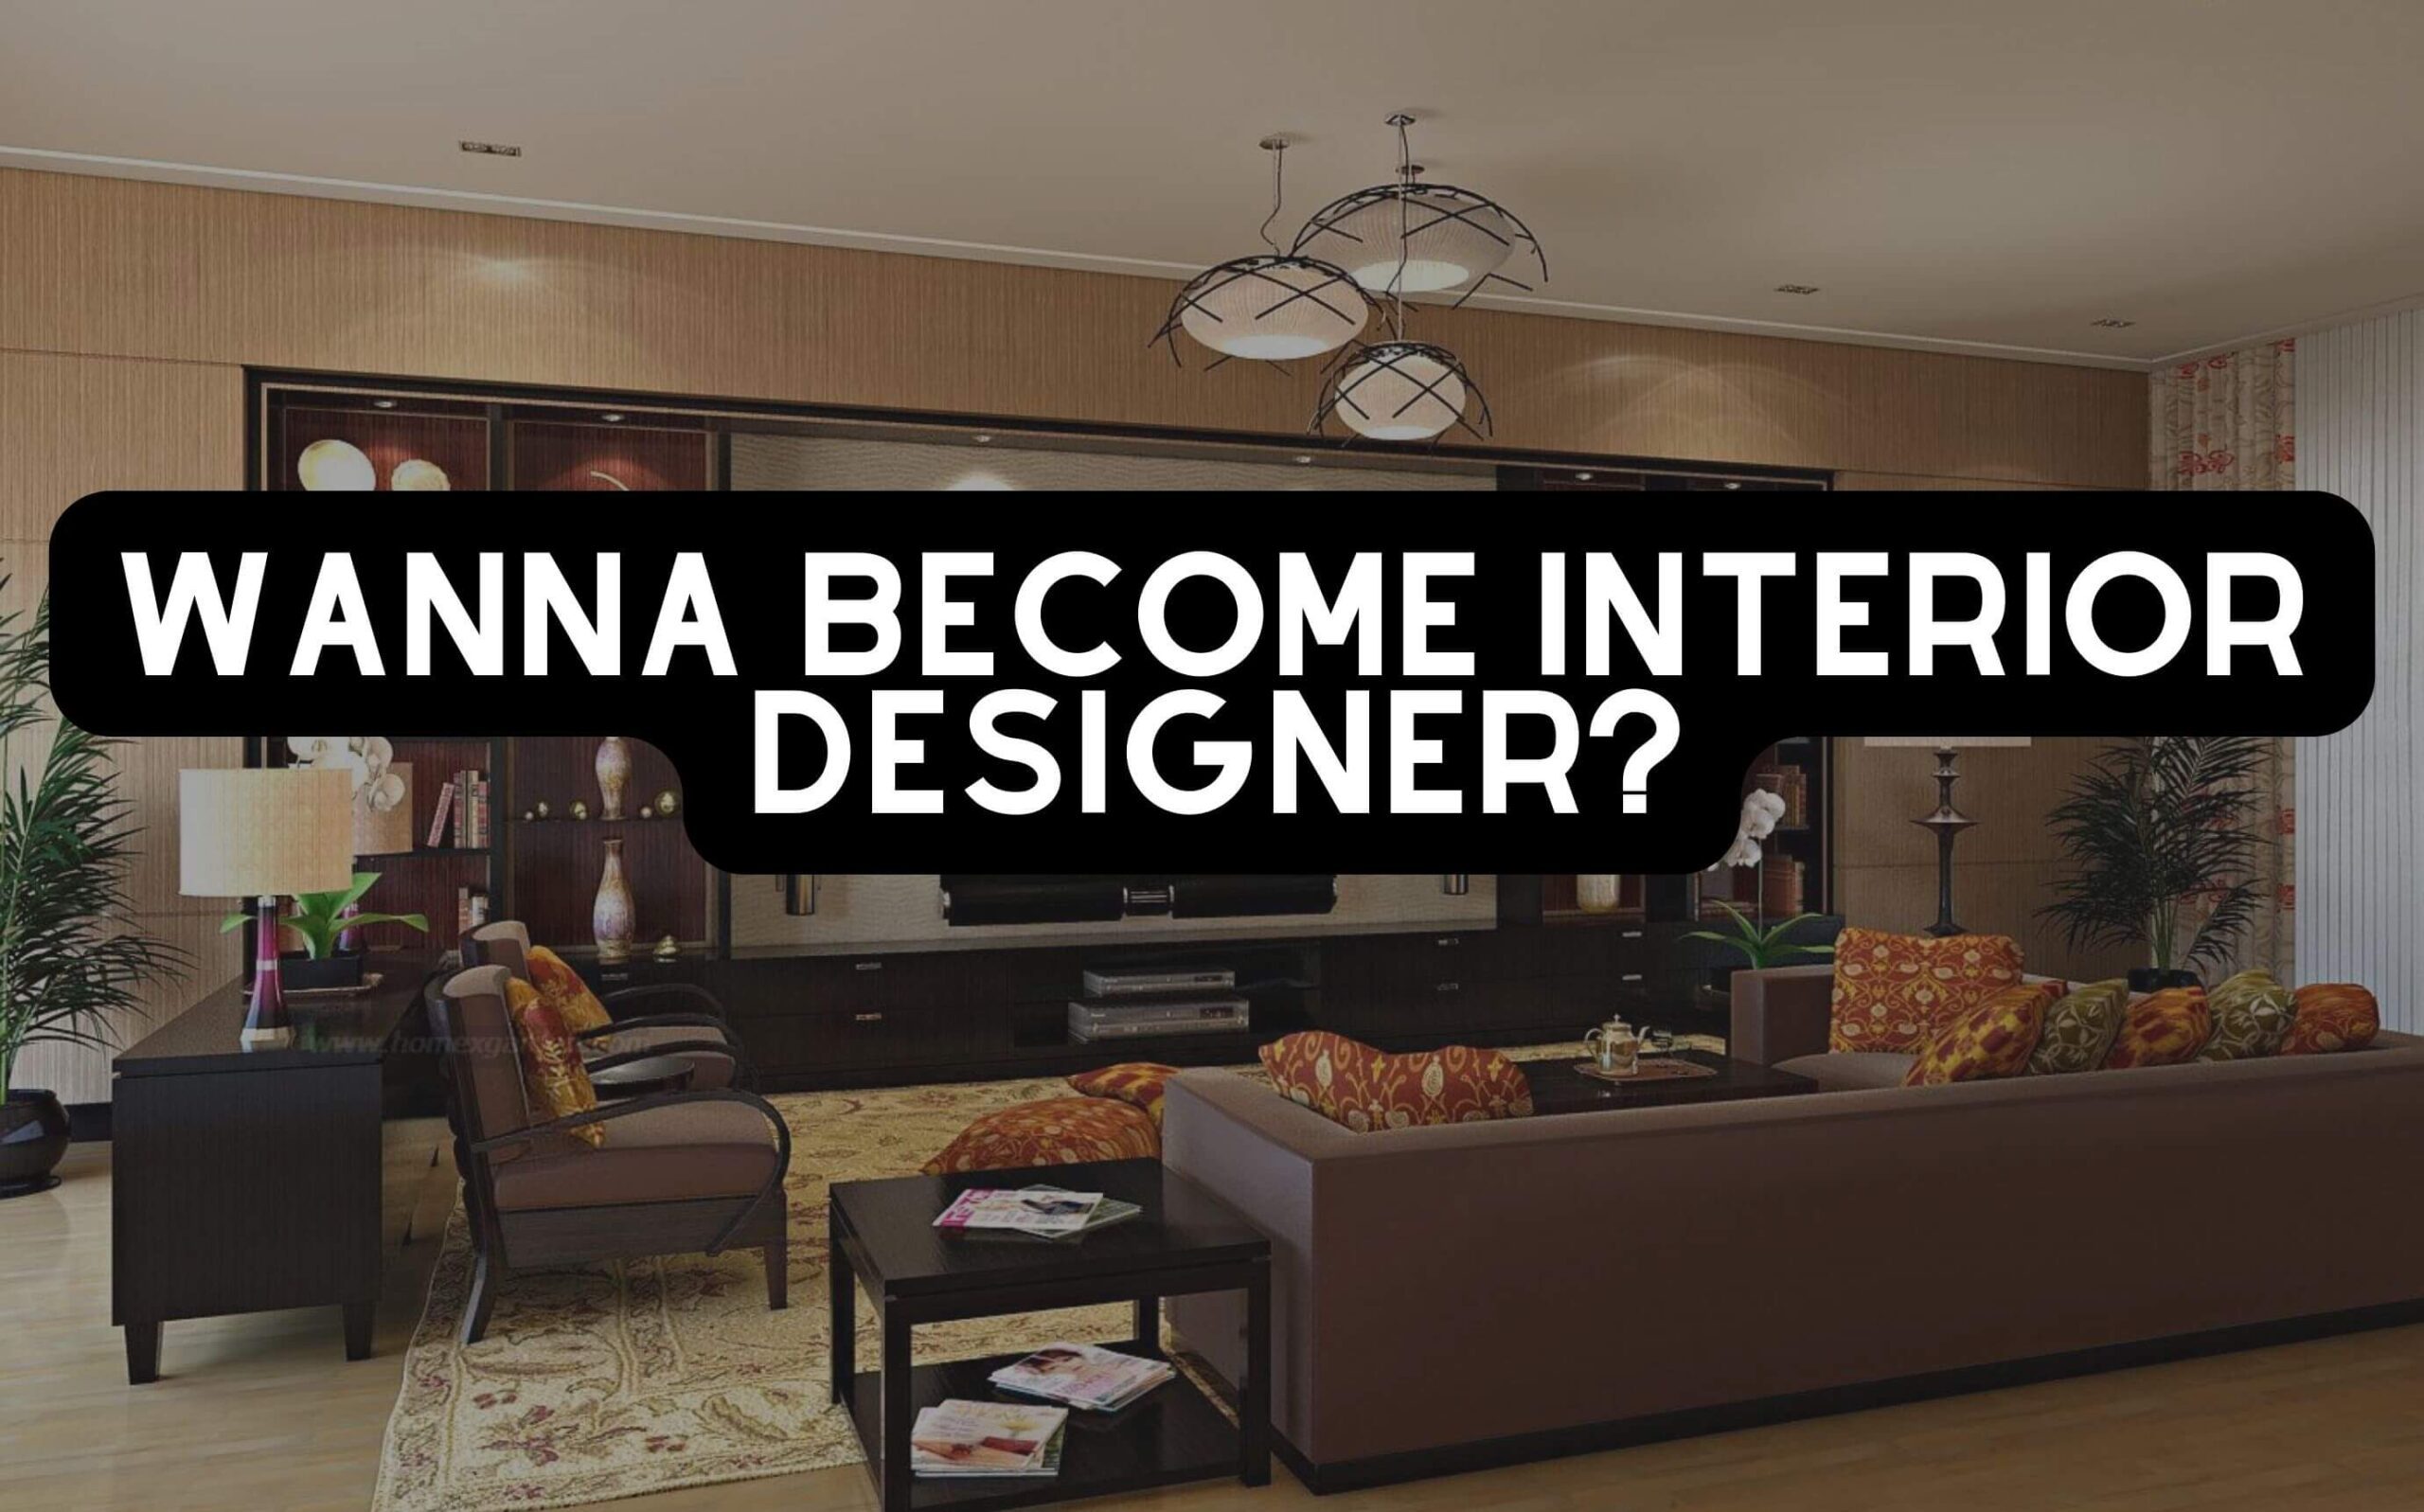 Interior designer's salary